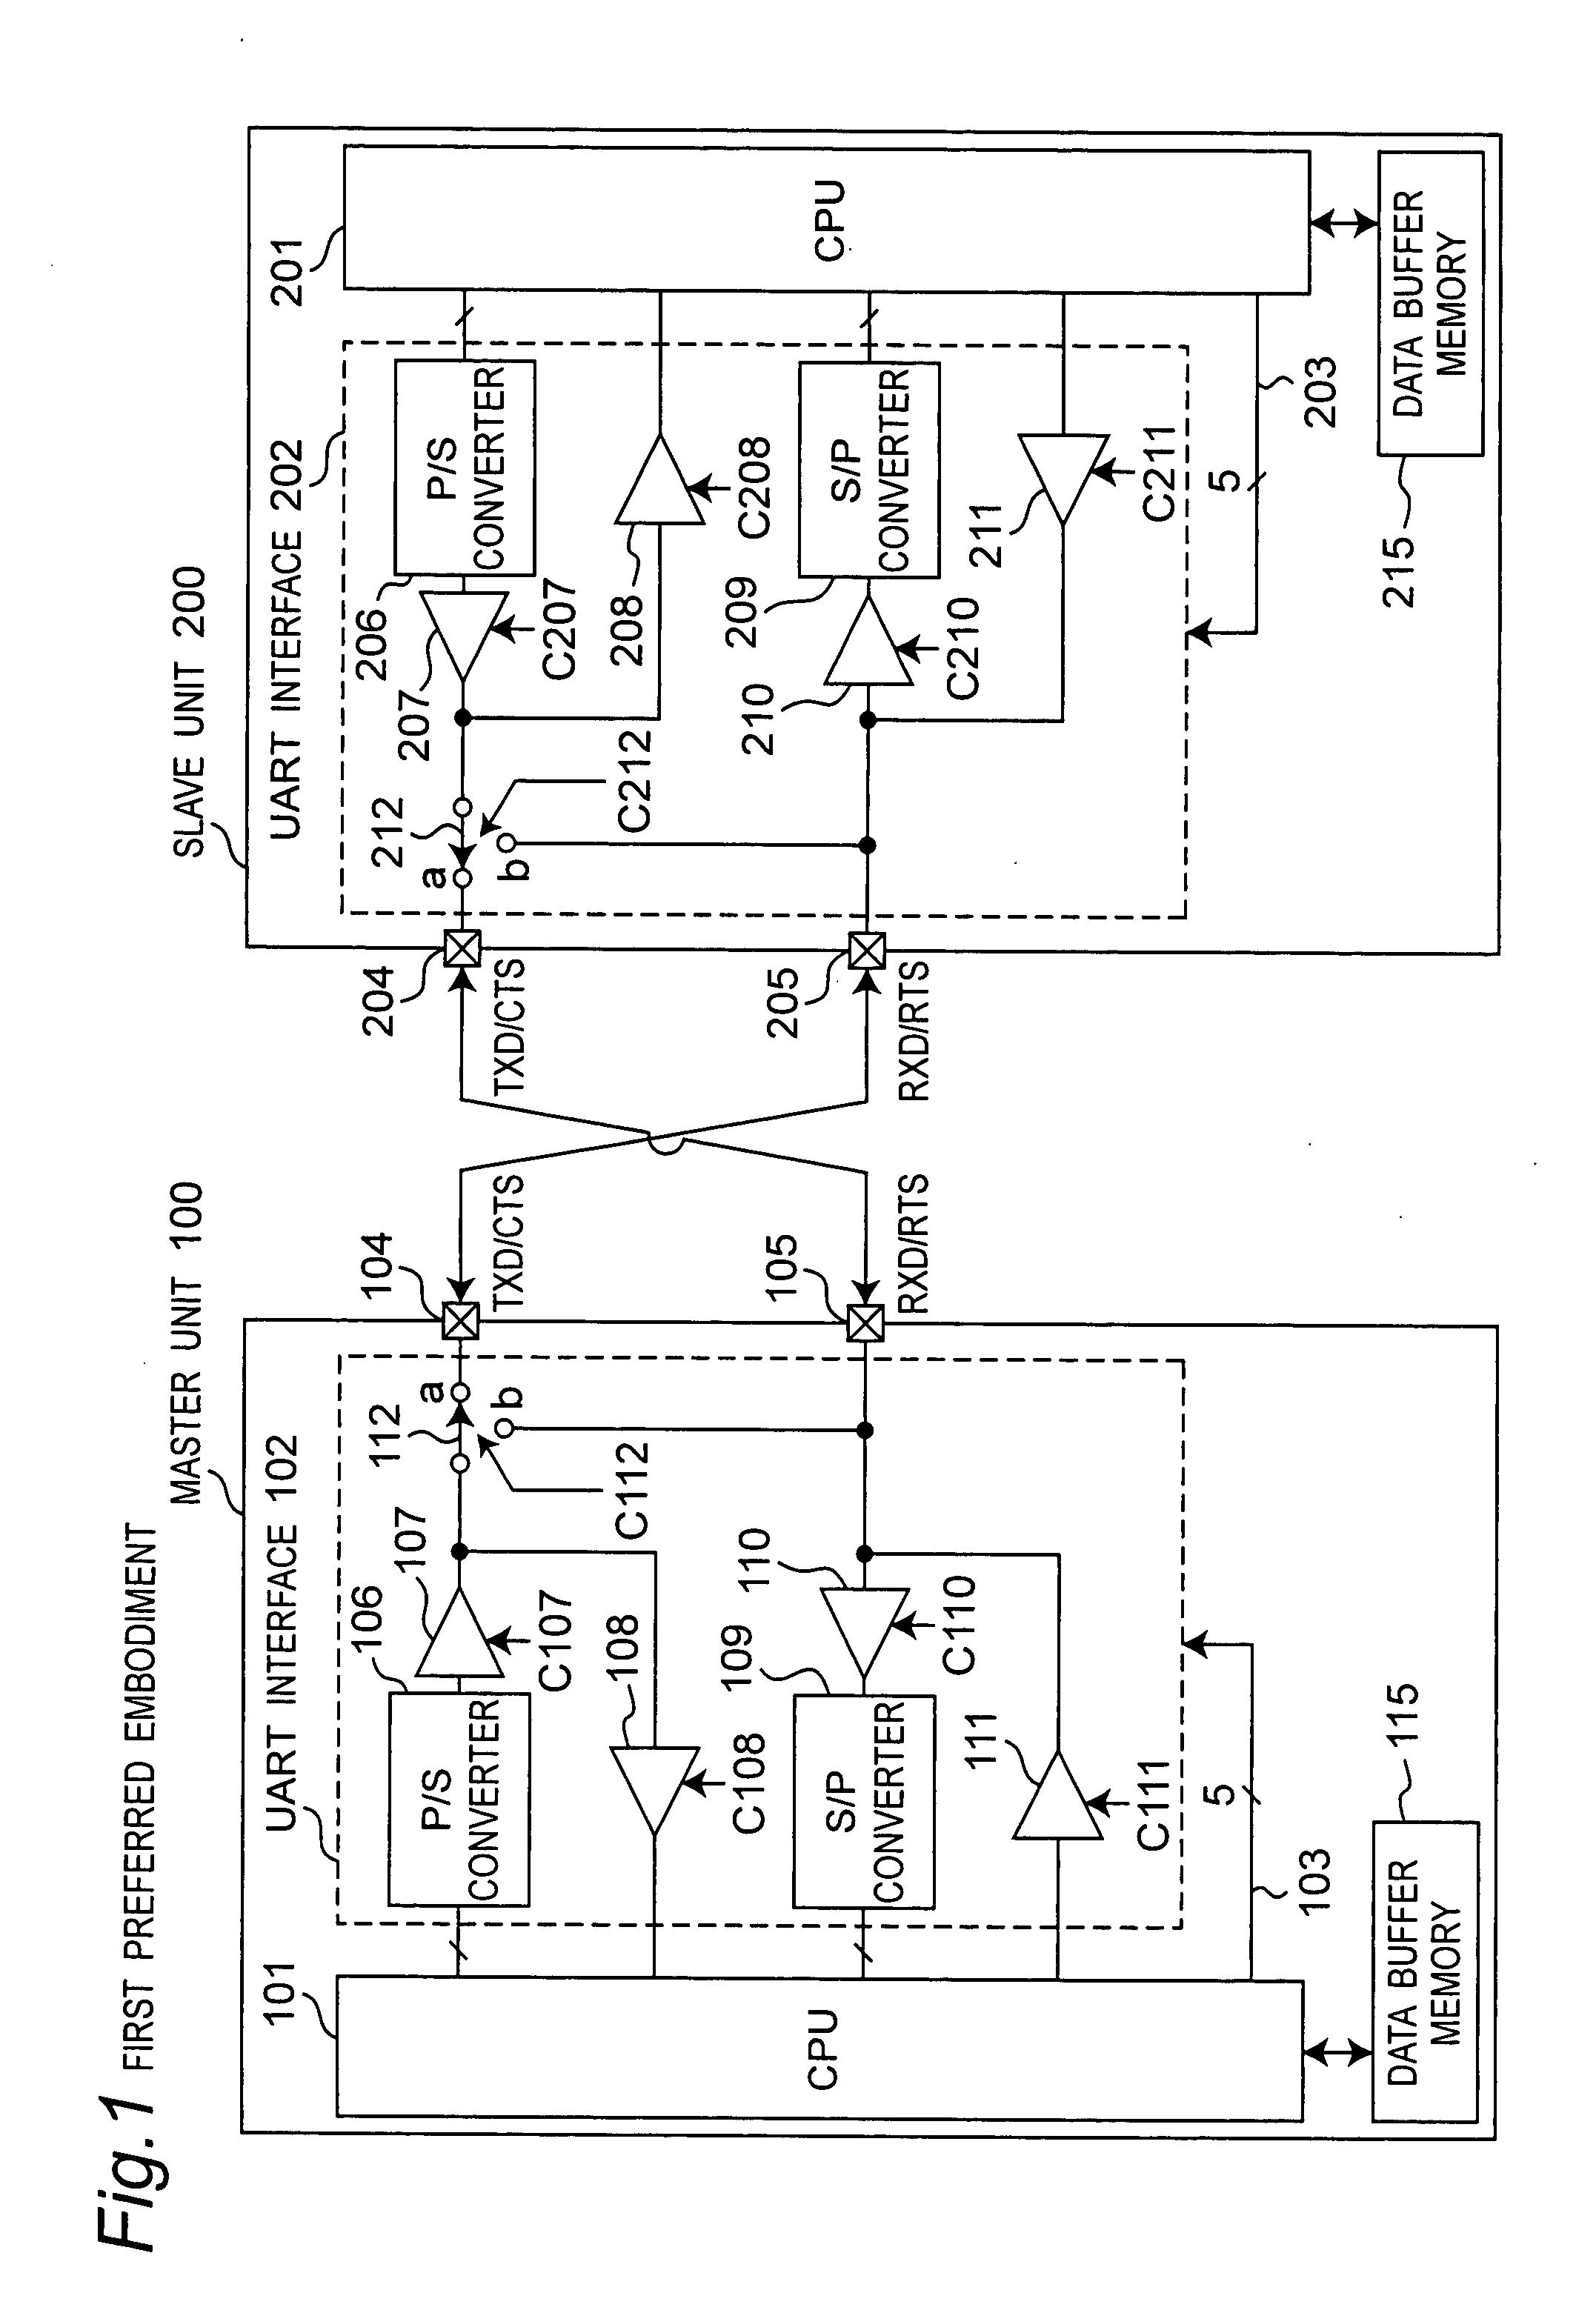 Serial interface apparatus performing asynchronous serial data transfer using asynchronous serial communication method